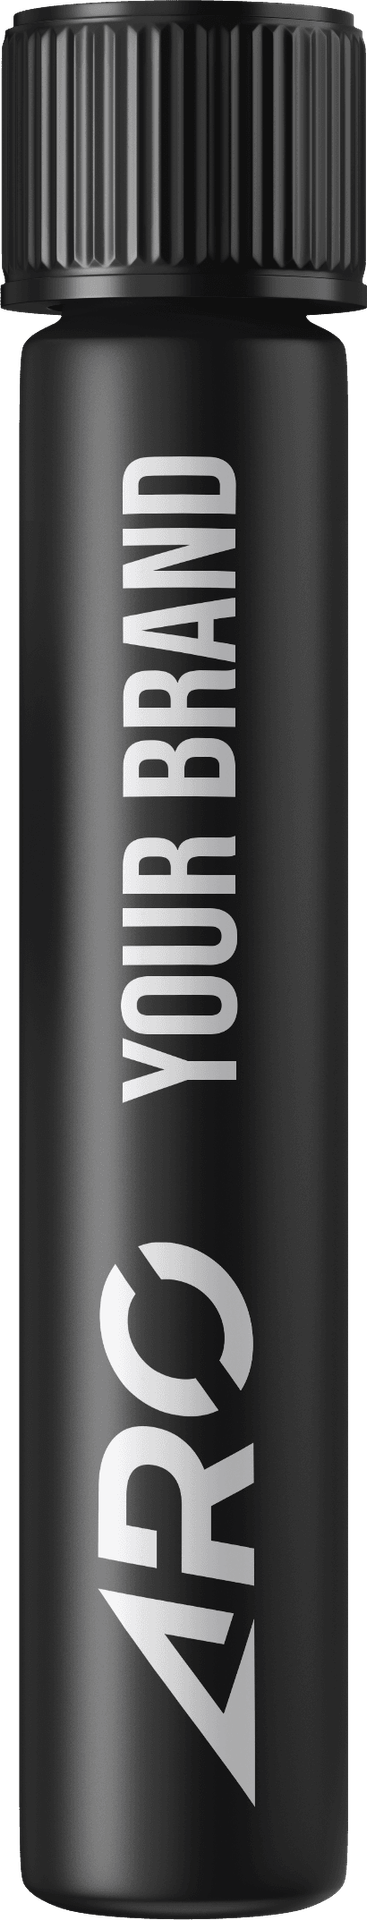 Black plastic pre roll tube ARO your brand text